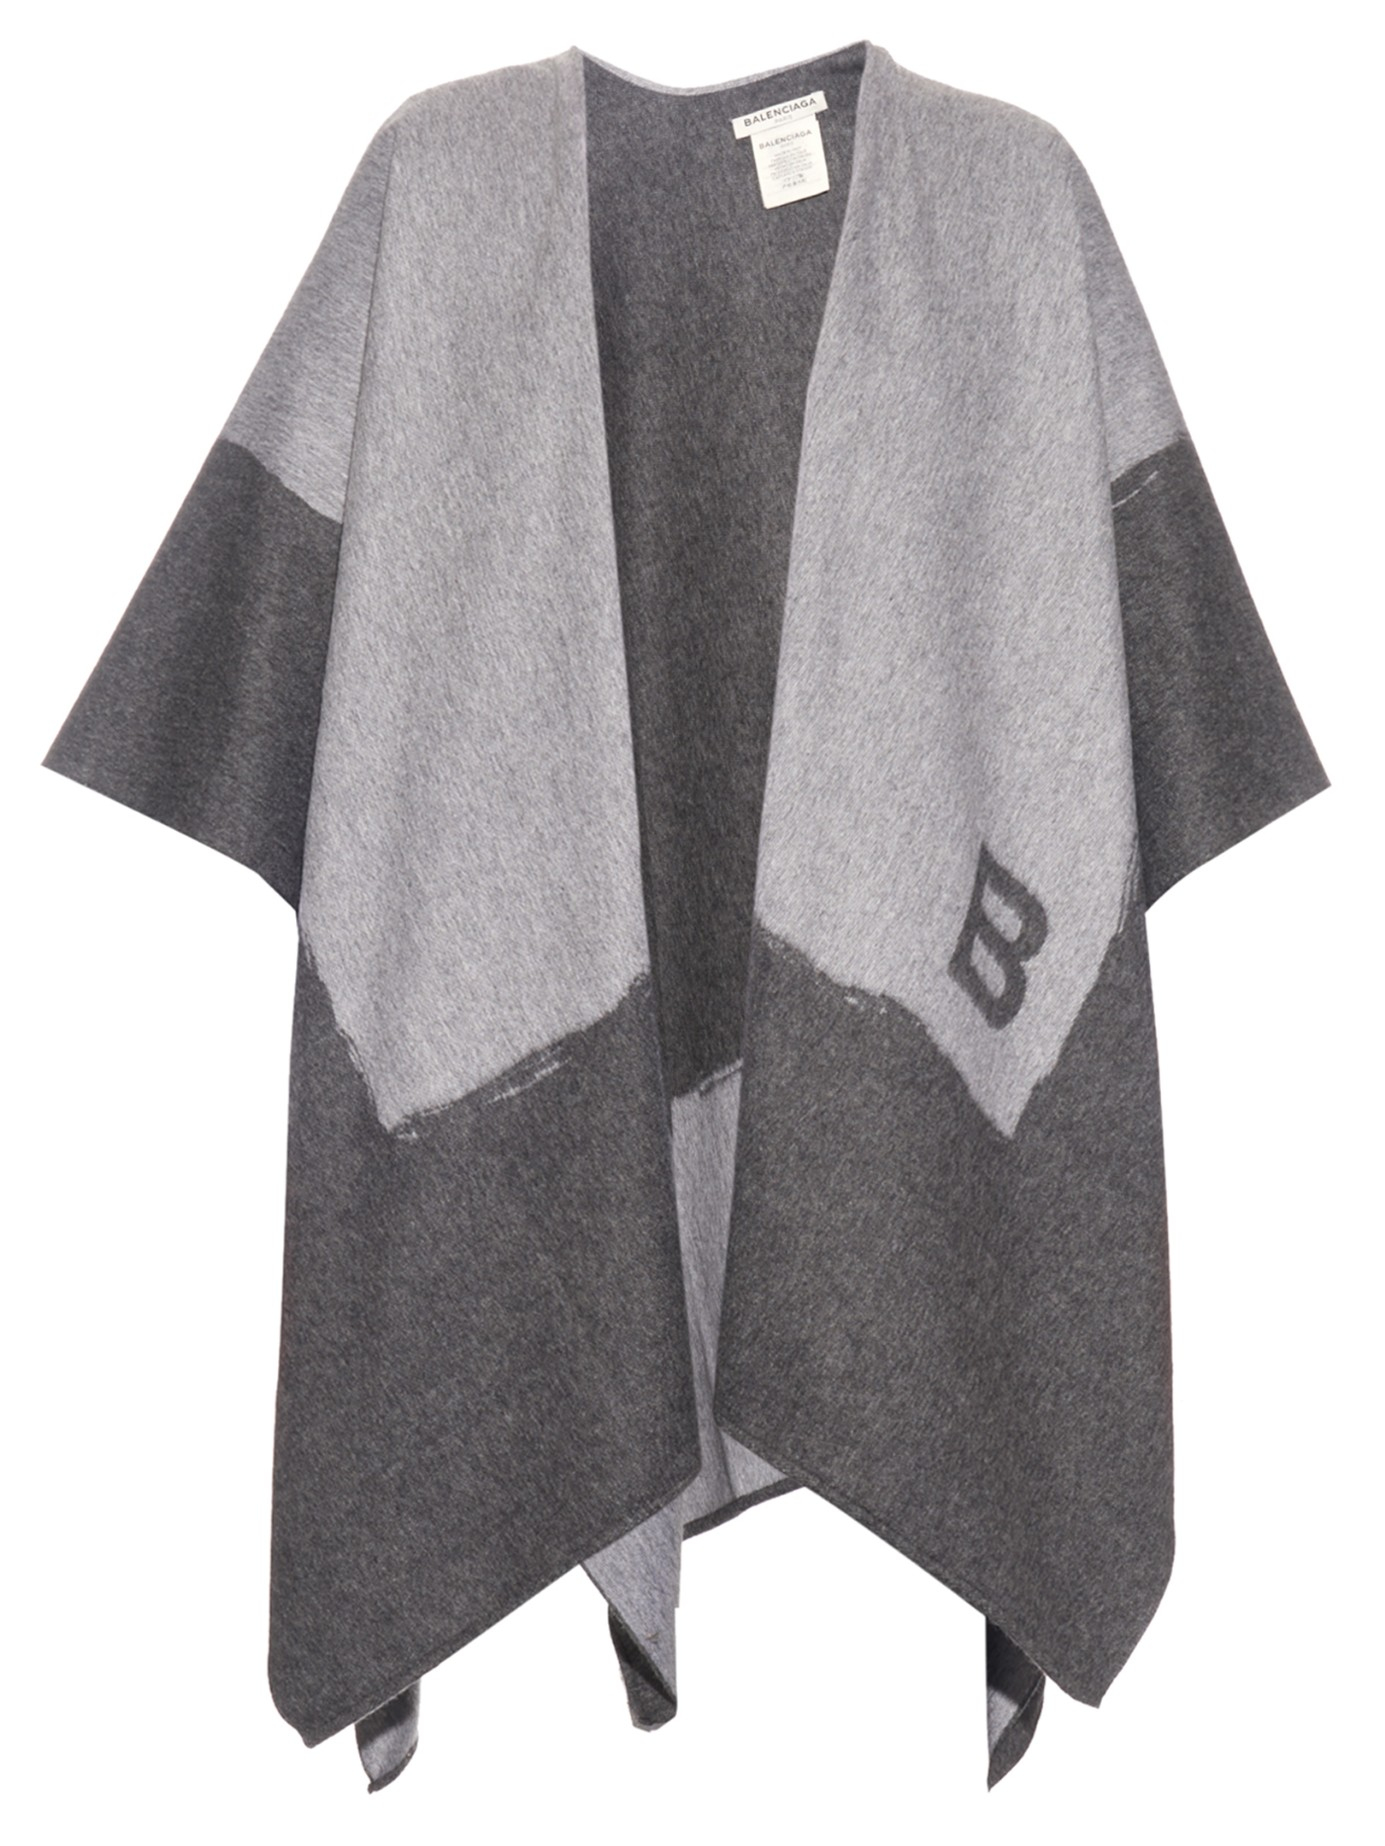 Lyst - Balenciaga Foulard Cashmere And Wool-blend Poncho in Gray